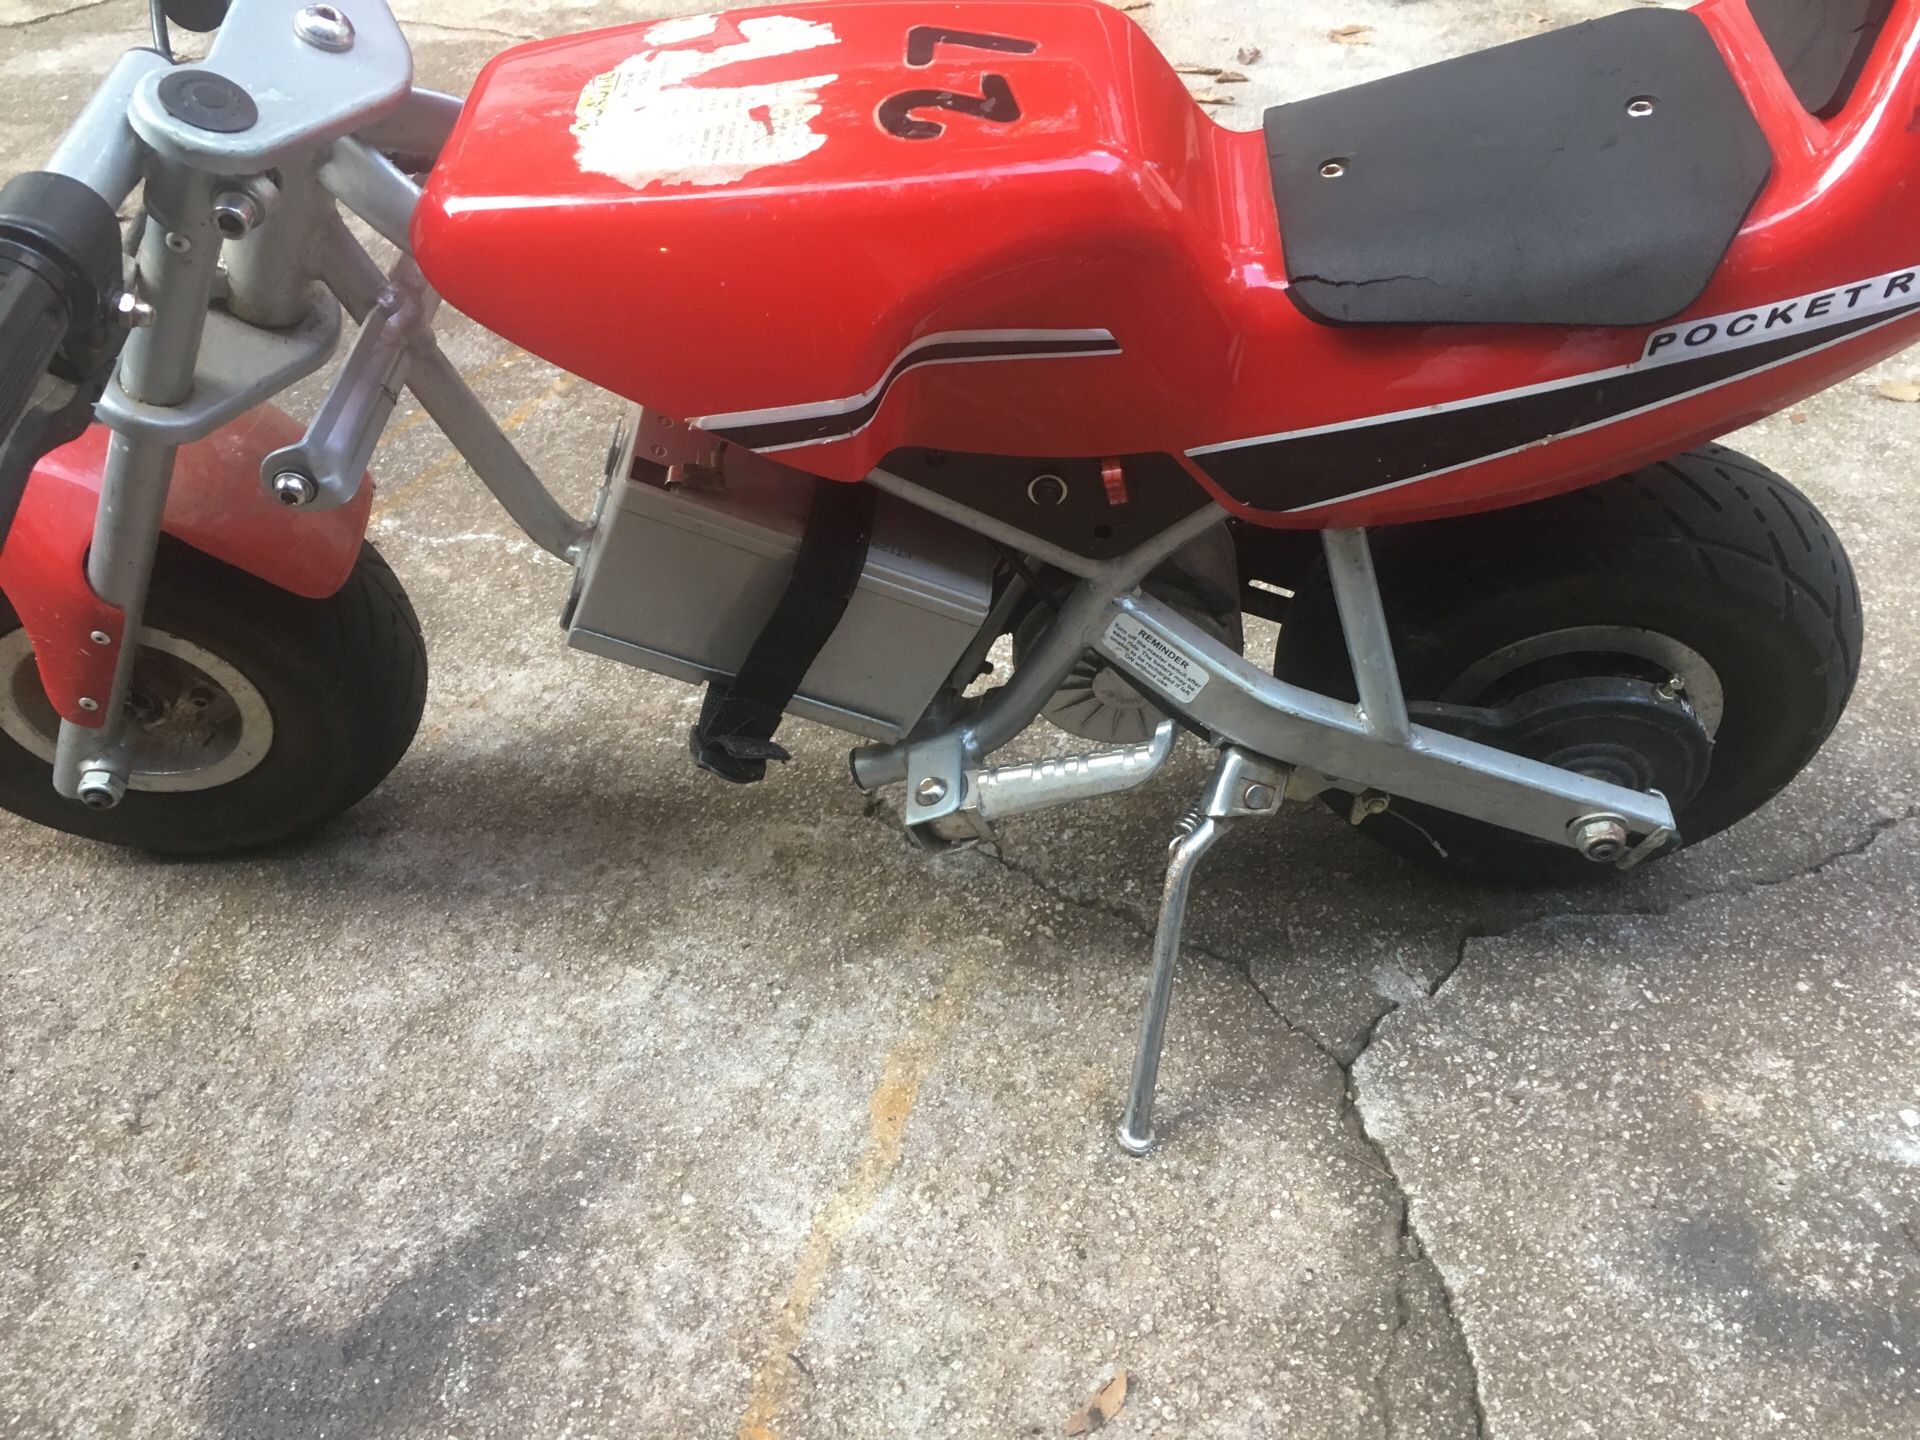 Razor pocket rocket mini 24v motorcycle